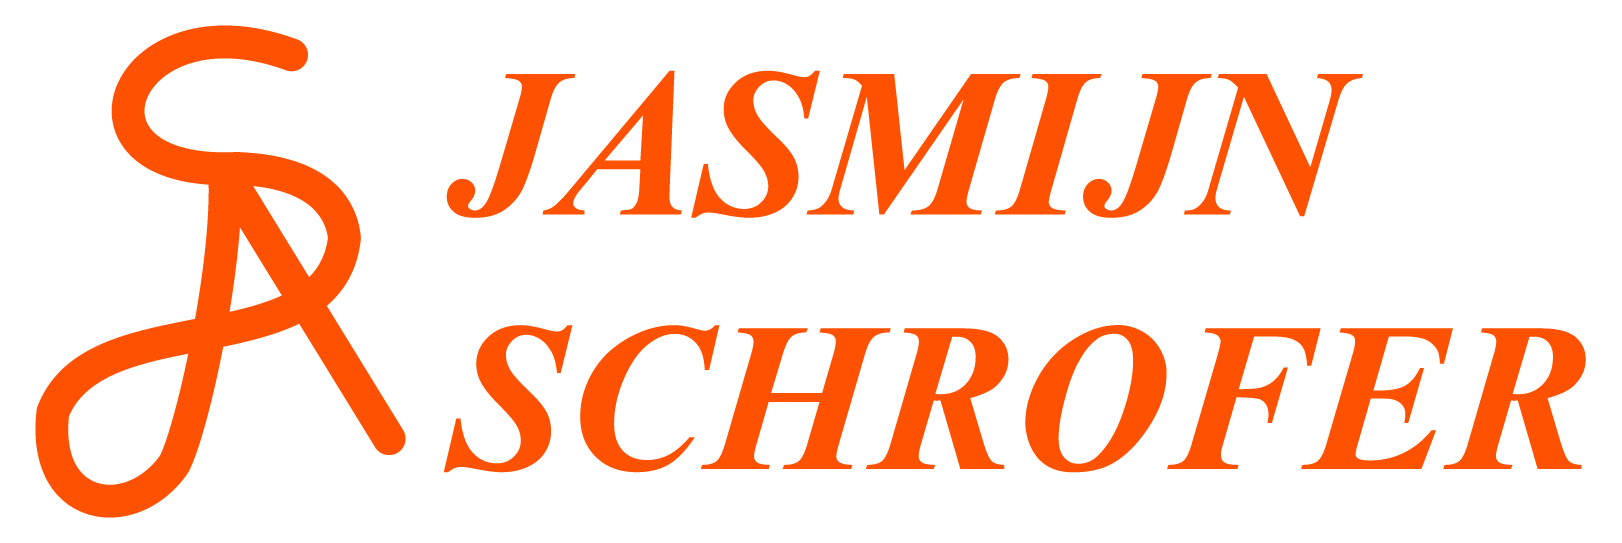 Jasmijn Schrofer